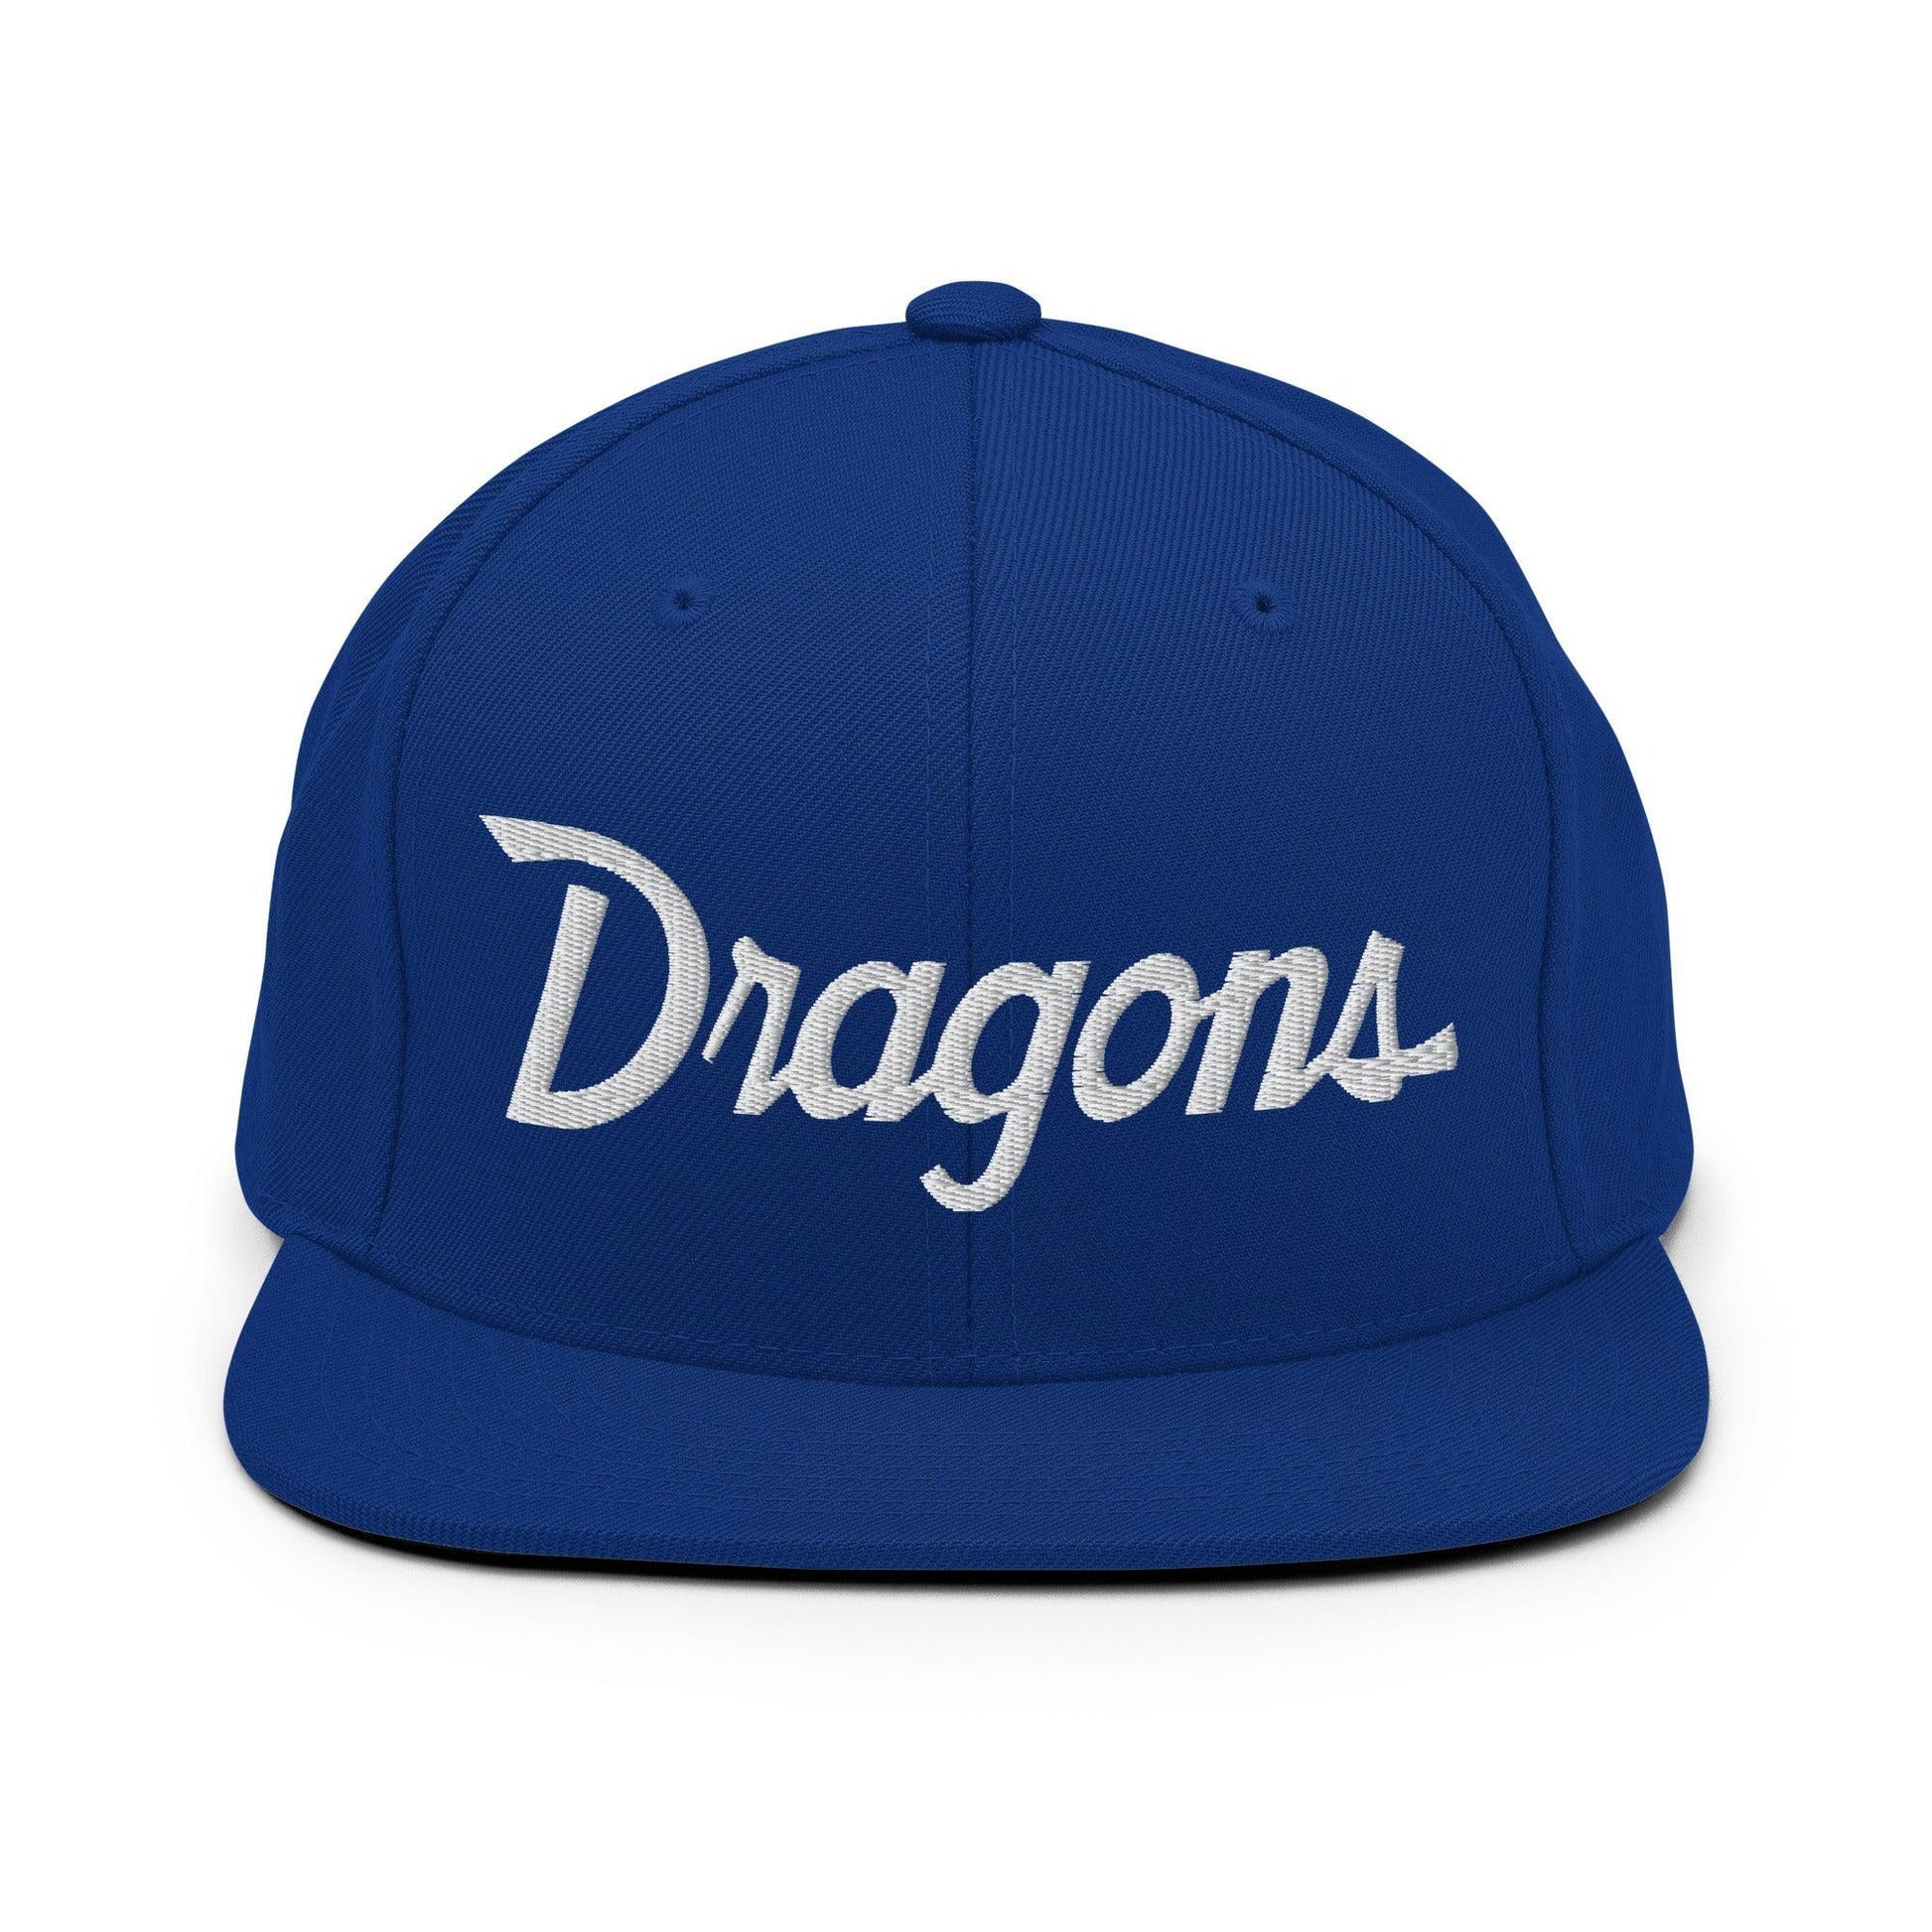 Dragons School Mascot Snapback Hat Royal Blue